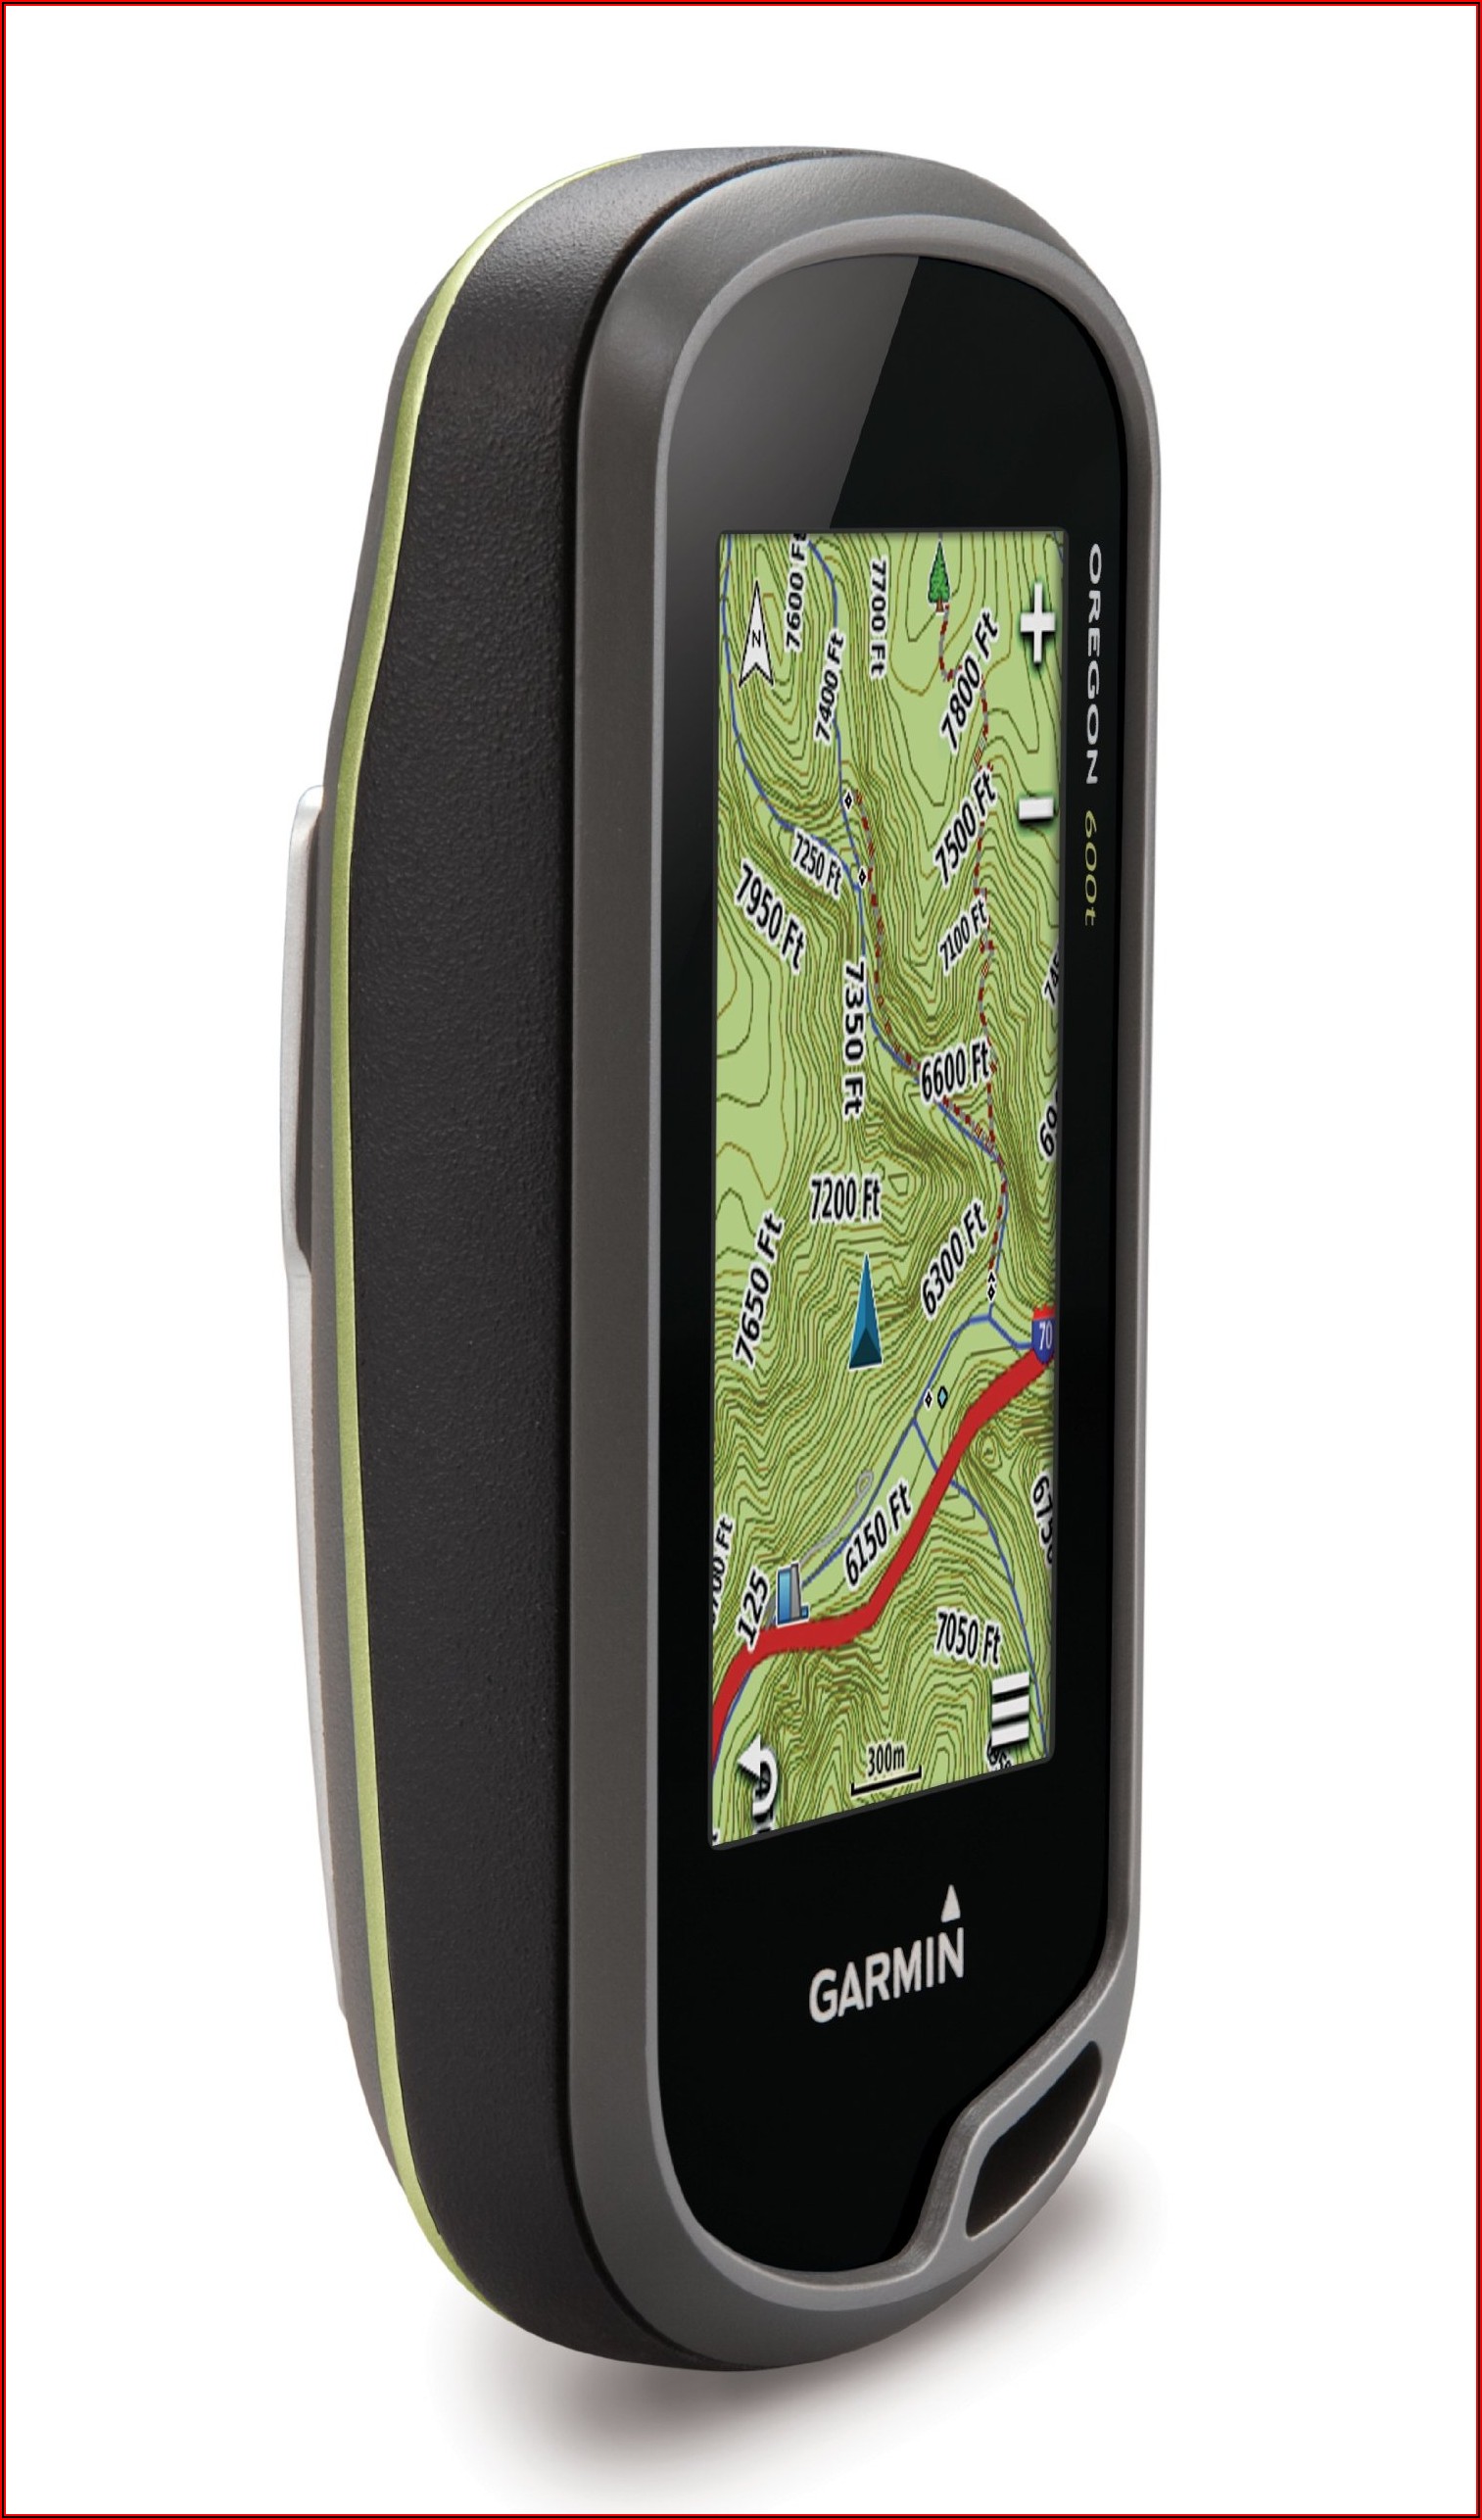 Handheld Gps With Topographic Maps